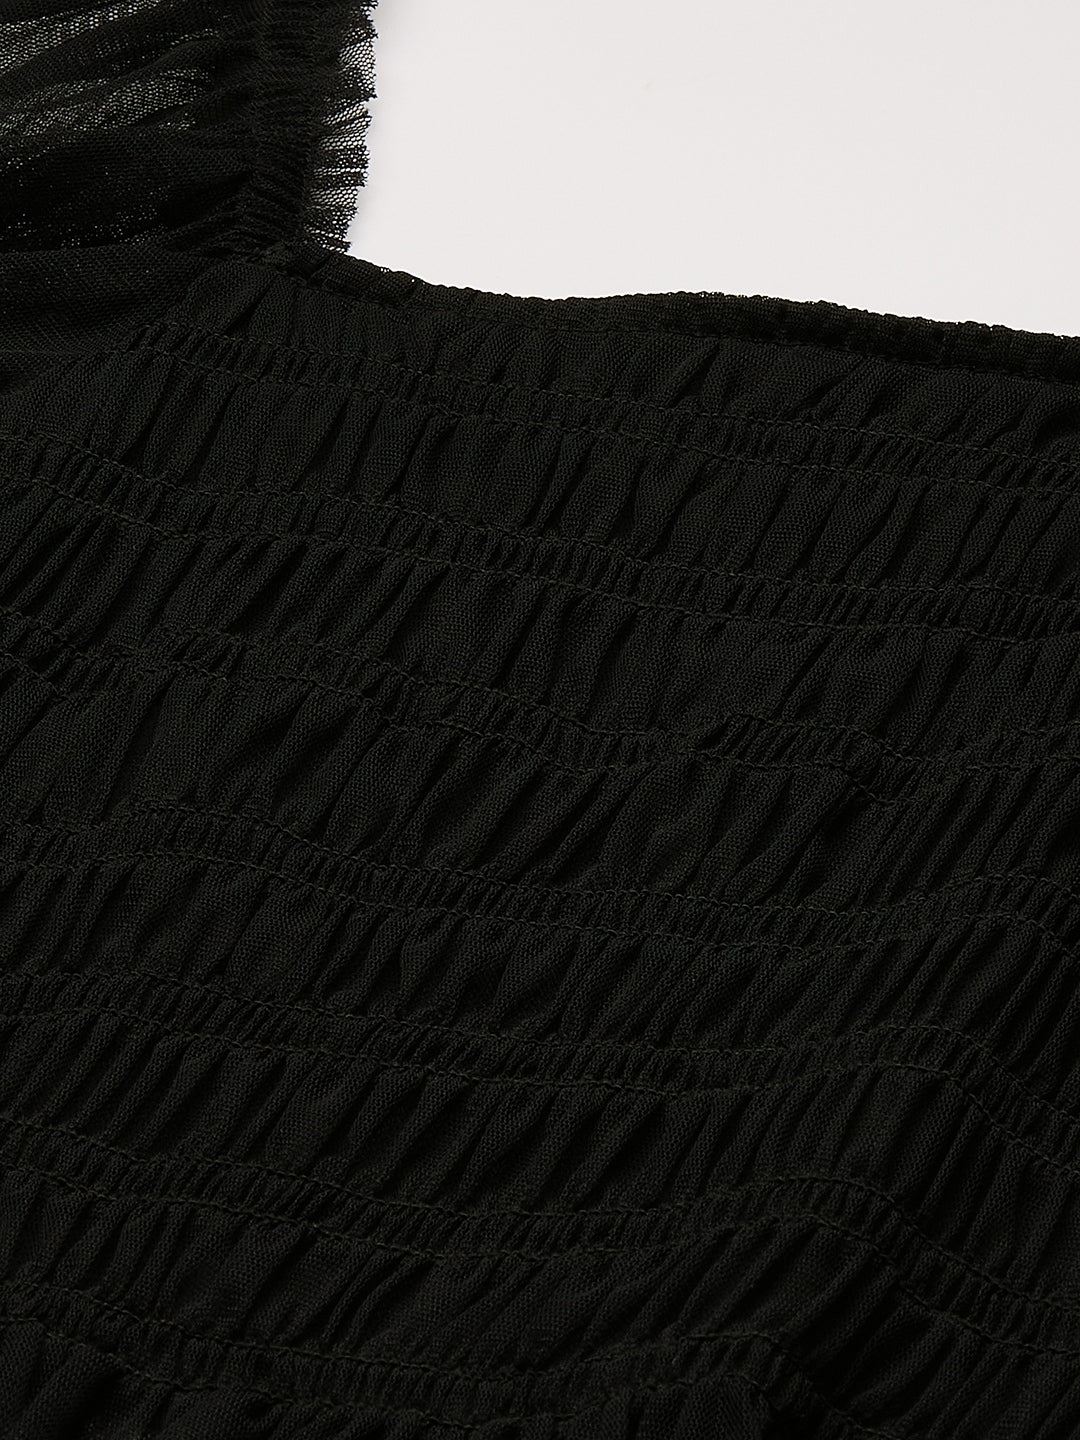 Black Smocked Net Fitted Crop Top